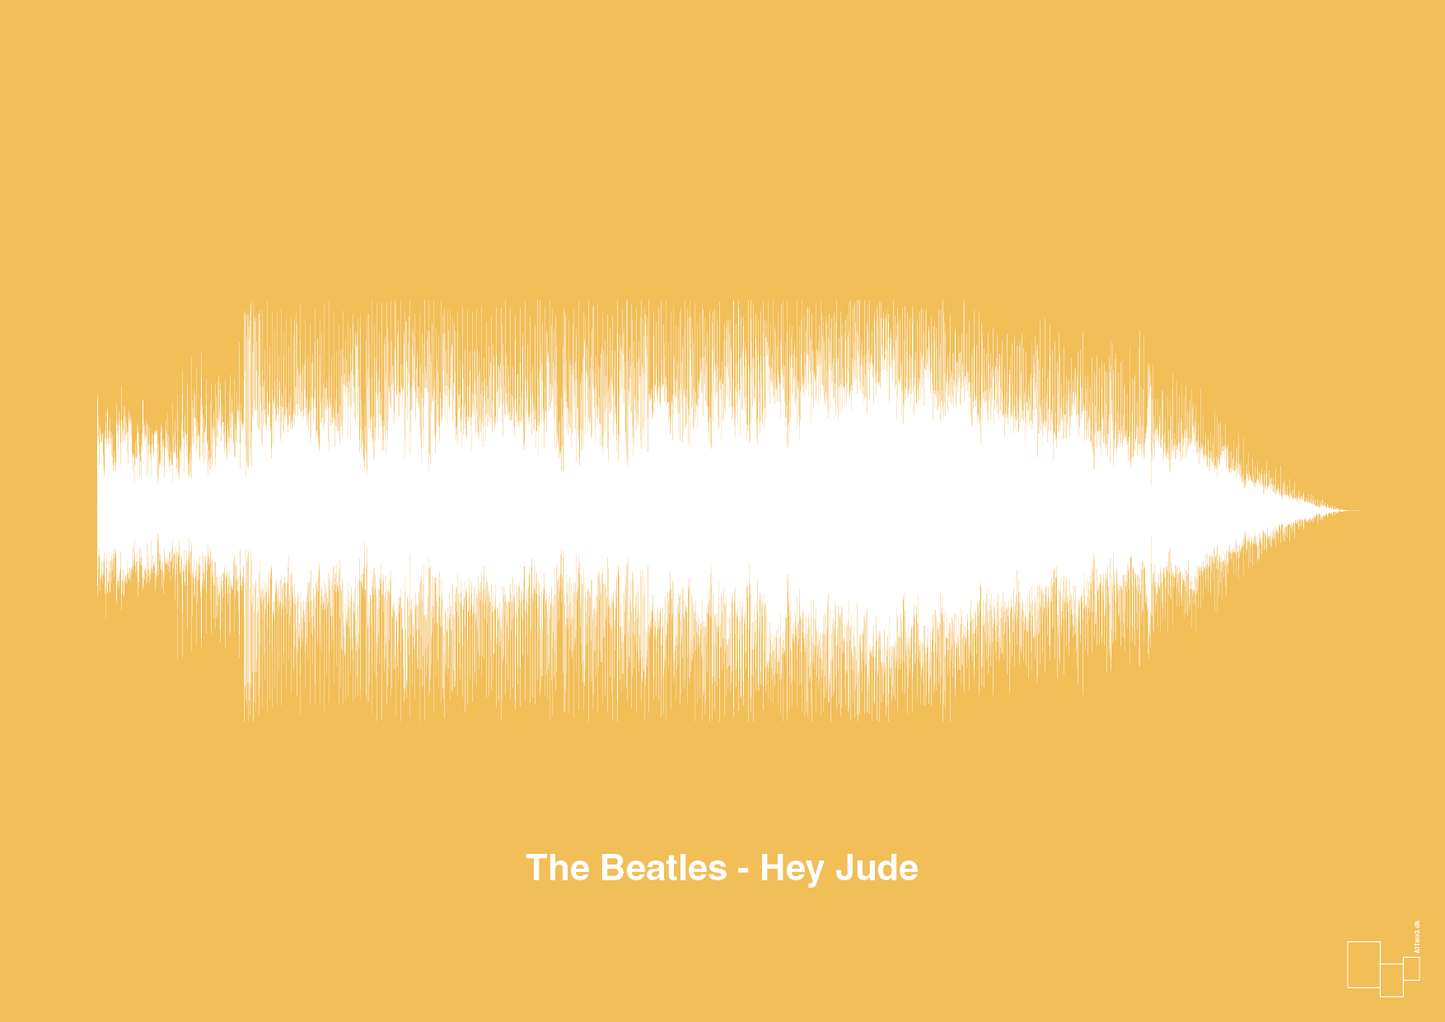 the beatles - hey jude - Plakat med Musik i Honeycomb